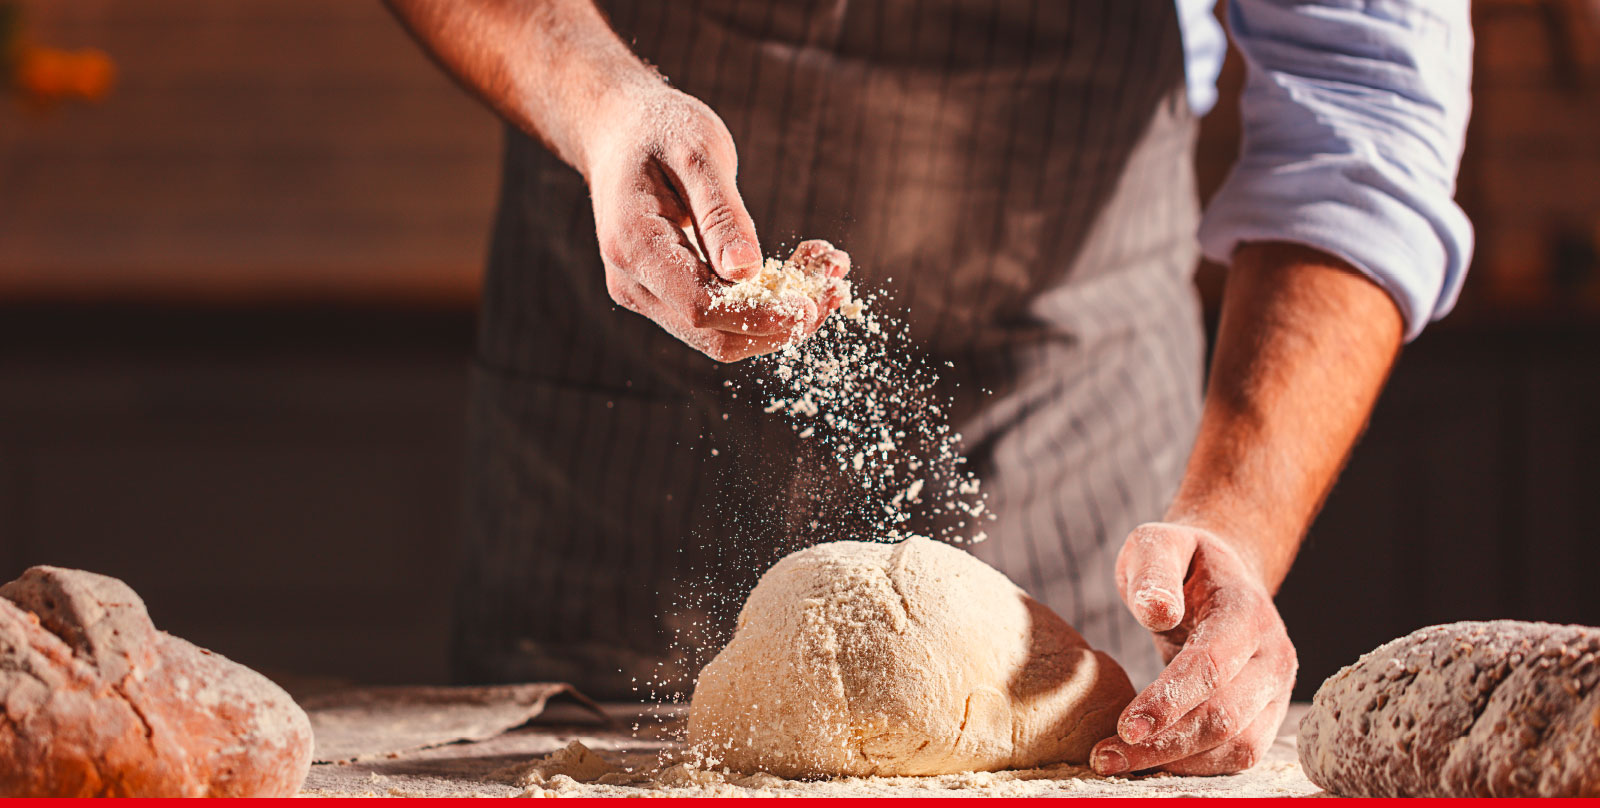 Baker kneads bread dough